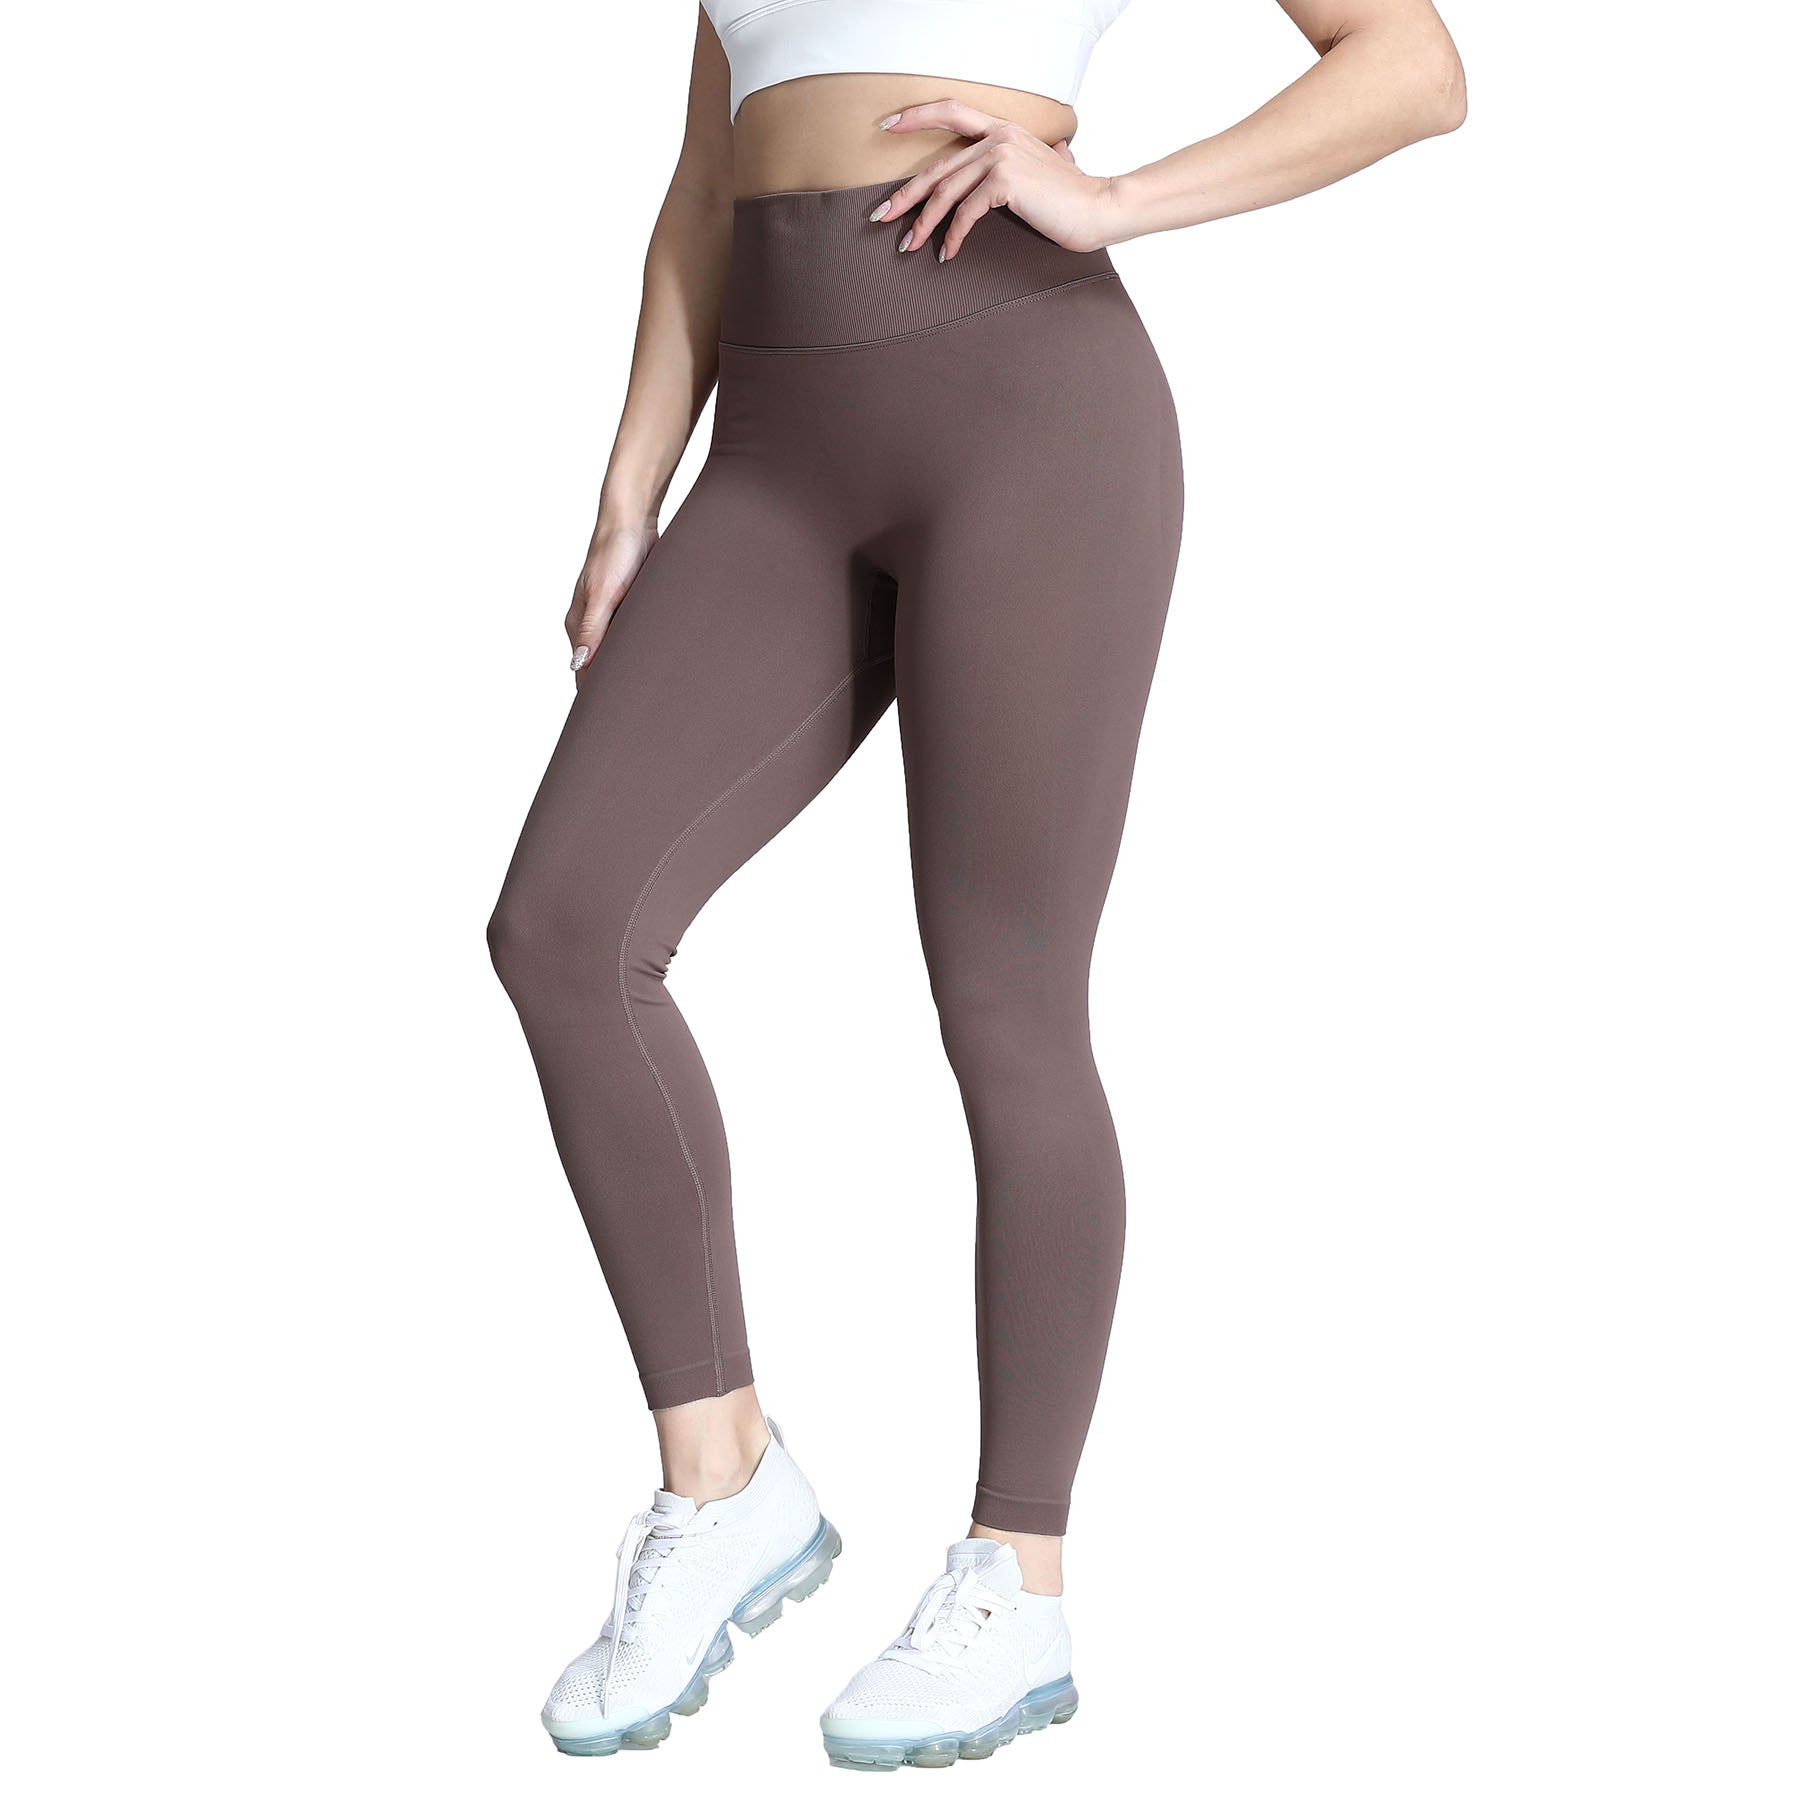 Buy JOYSPELS Women's Seamless Gym Leggings - Scrunch Bums Butt